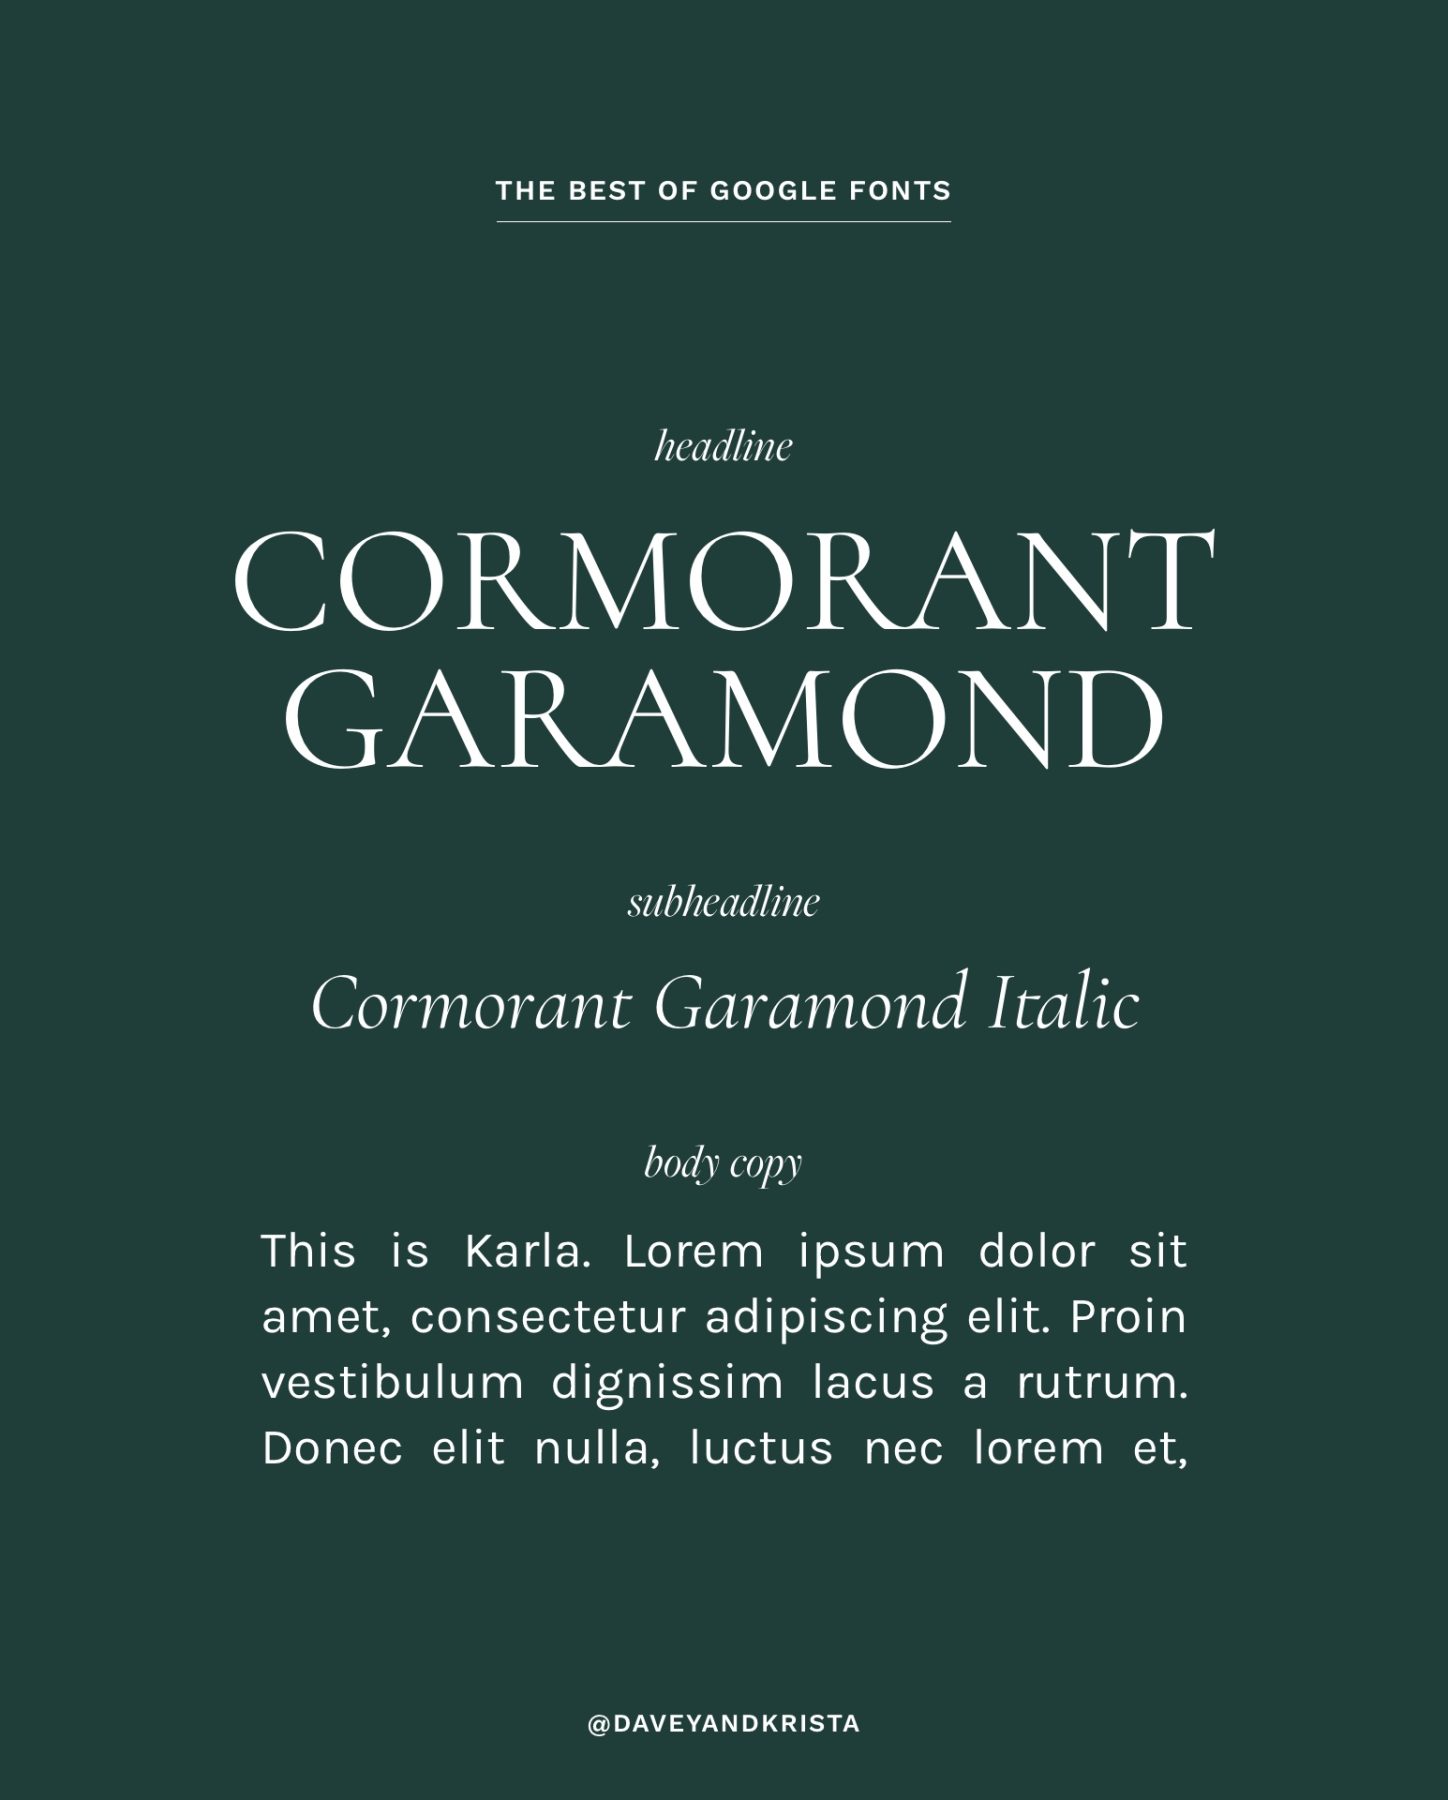 The best of Google Fonts: Cormorant Garamond + Karlal | Via Davey & Krista
